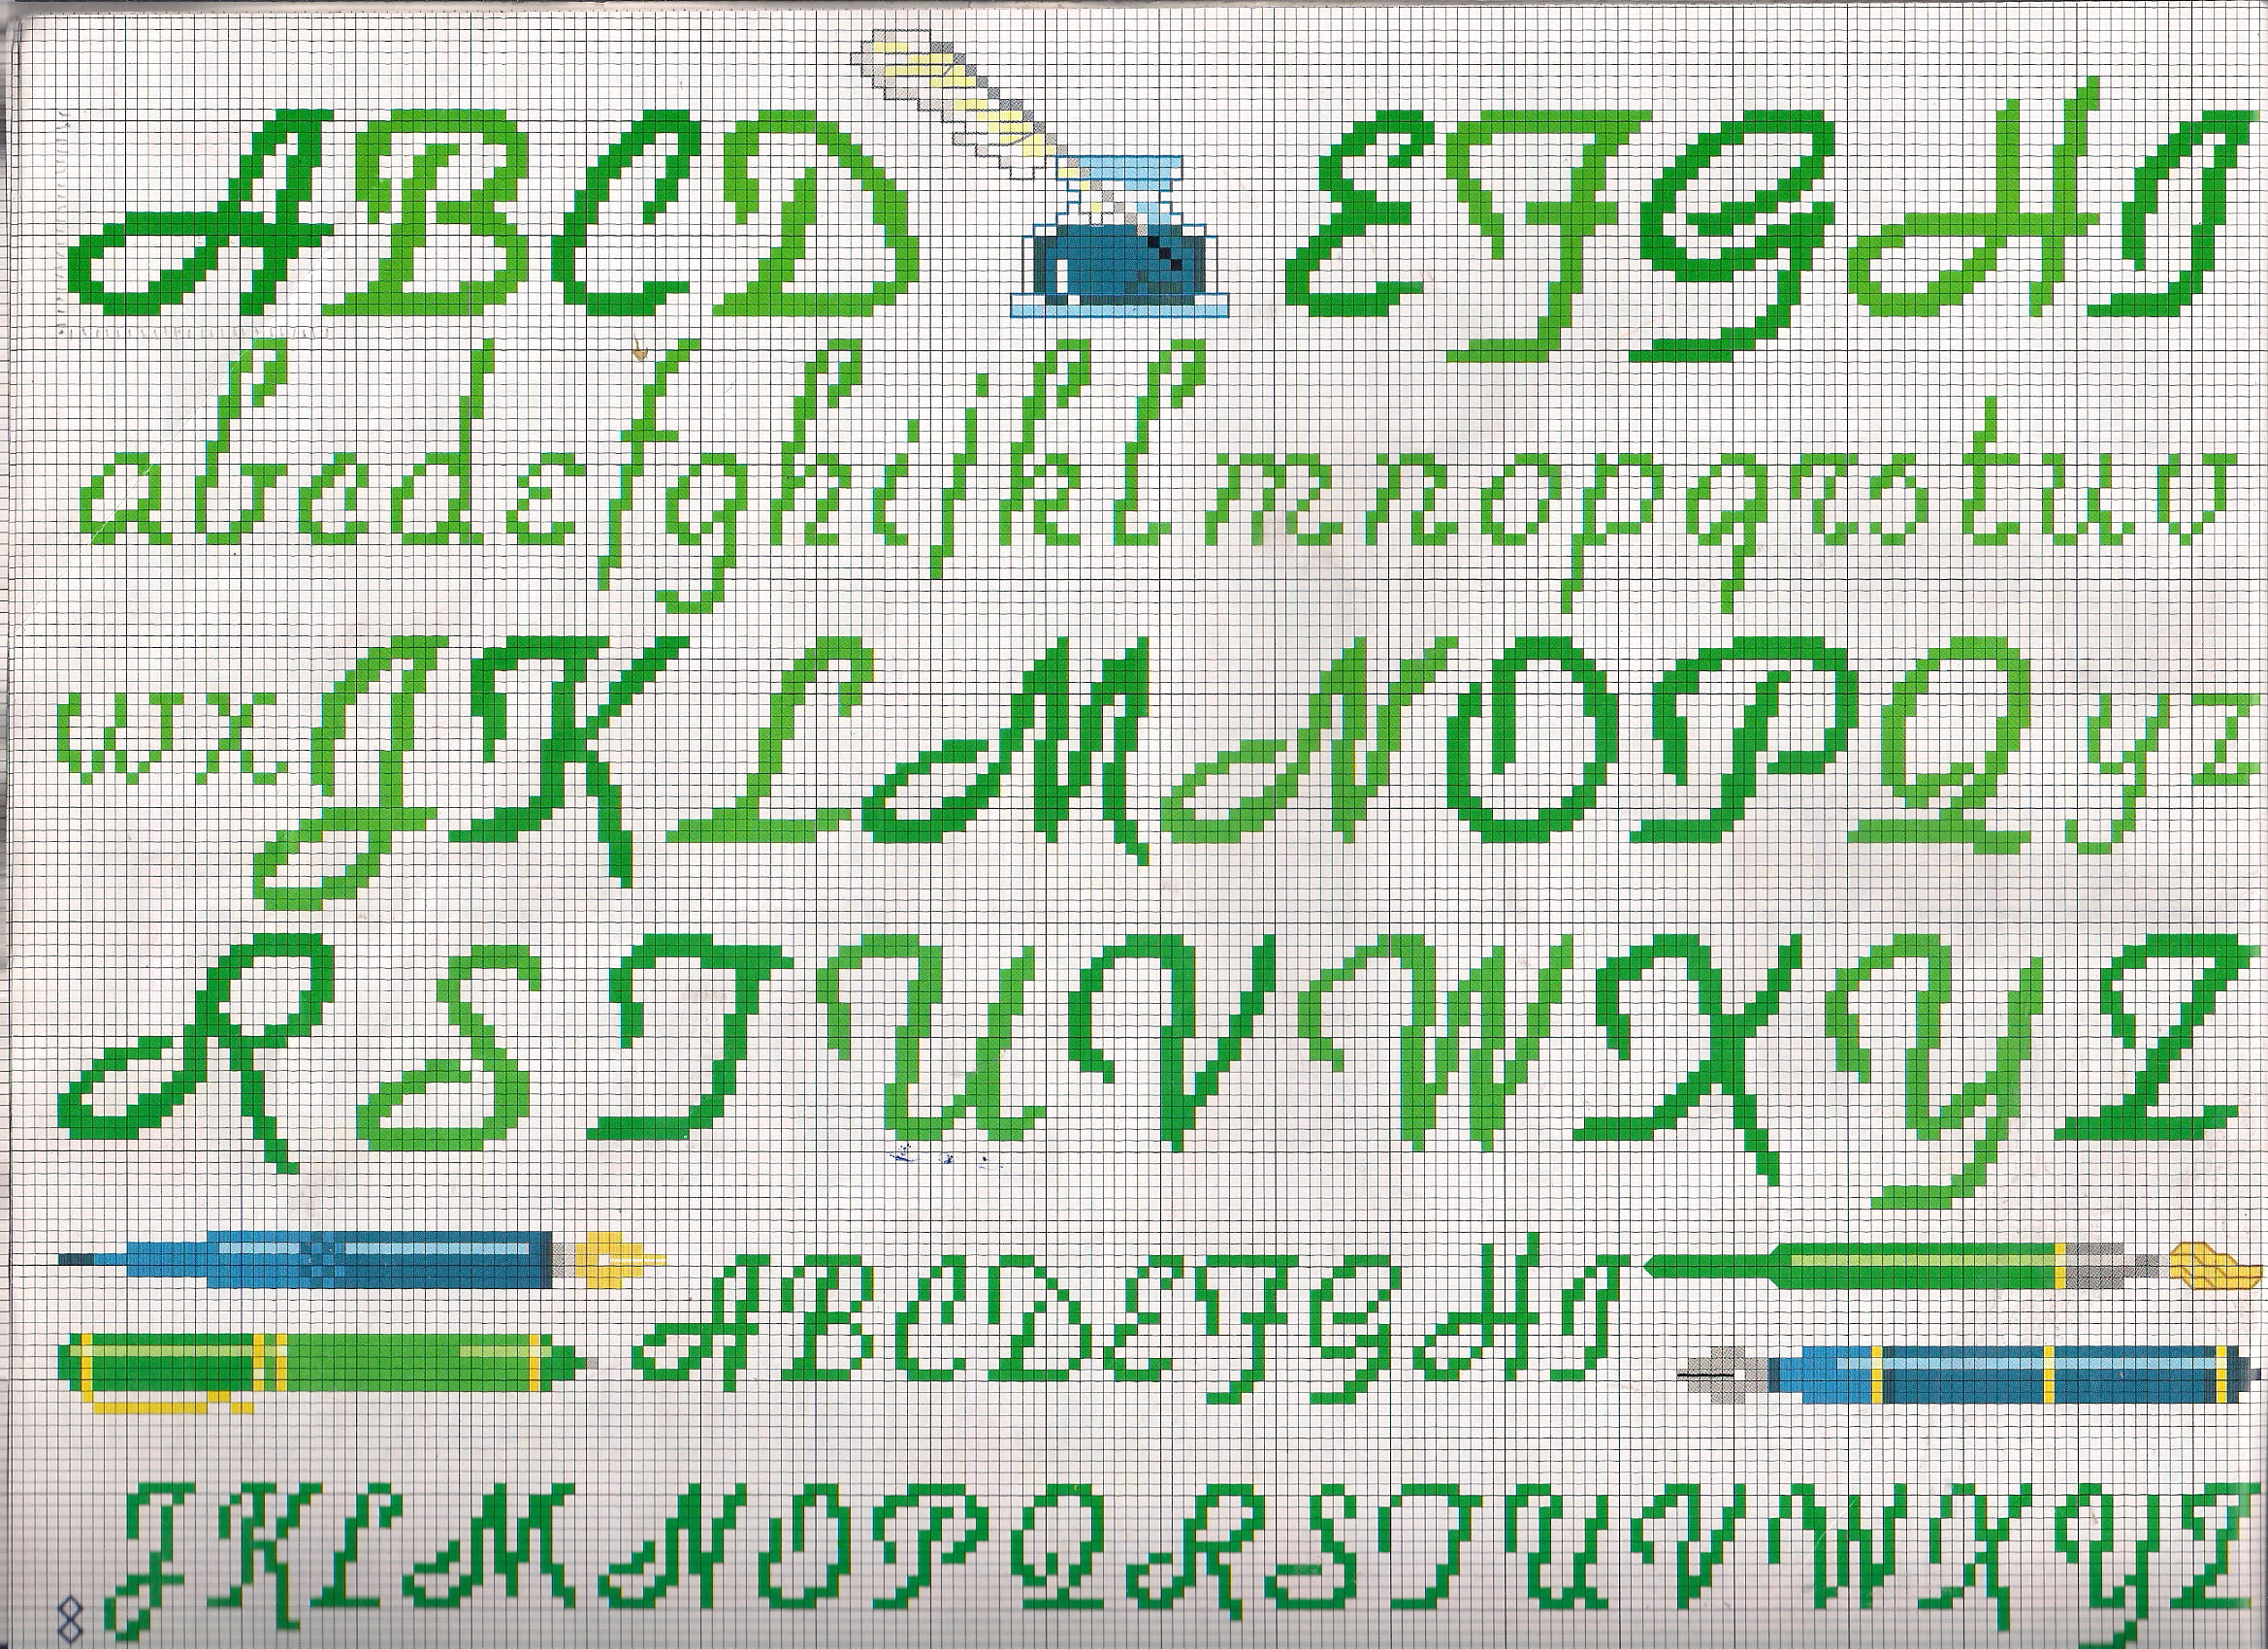 Stylized alphabet letters